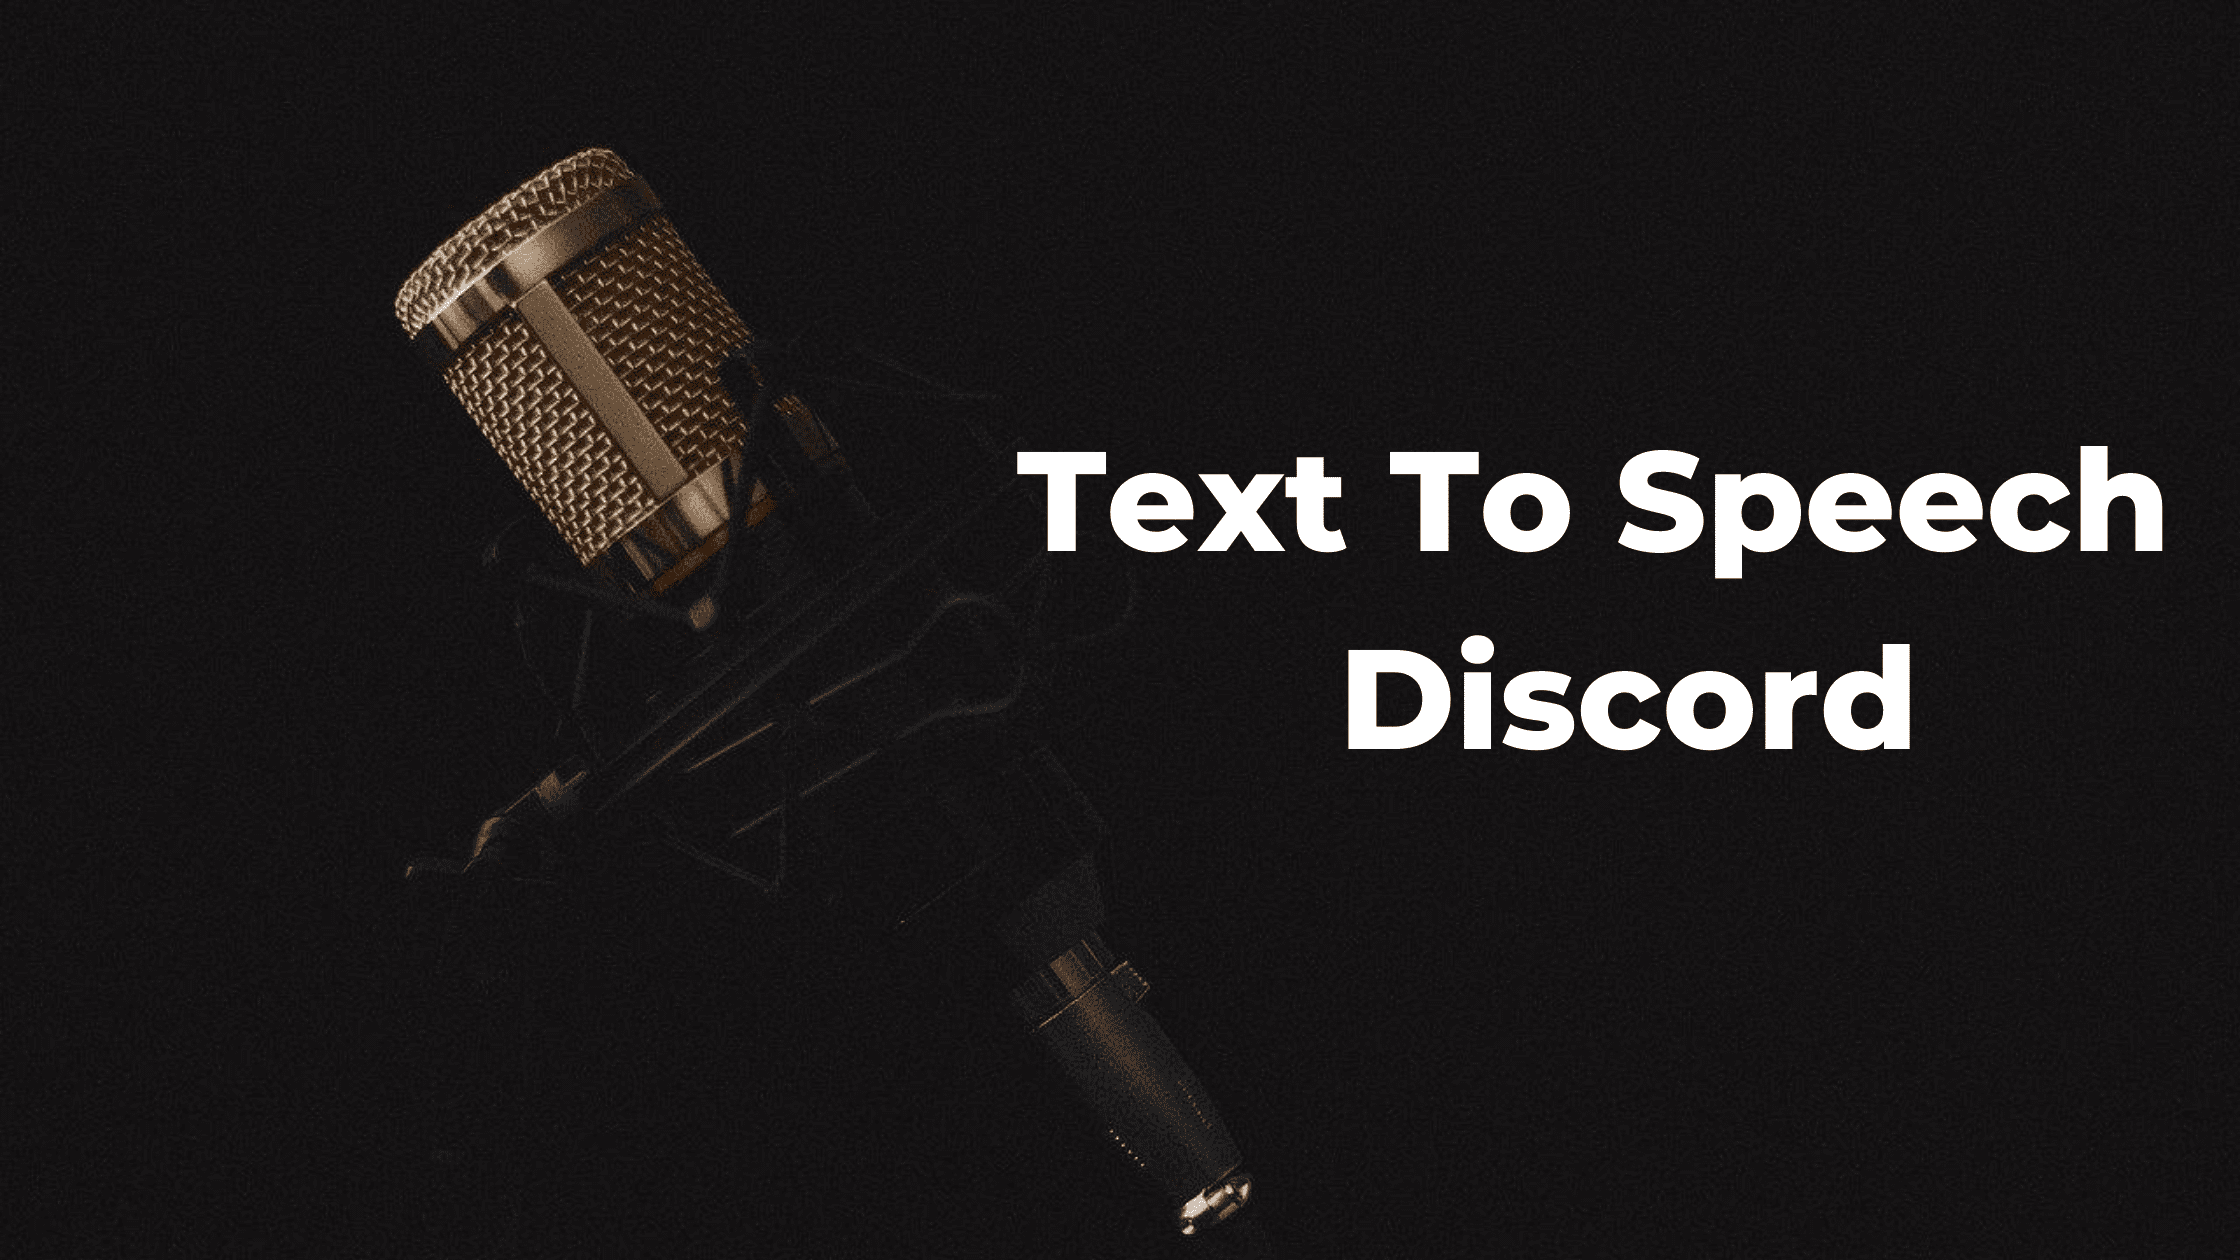 Text To Speech on Discord